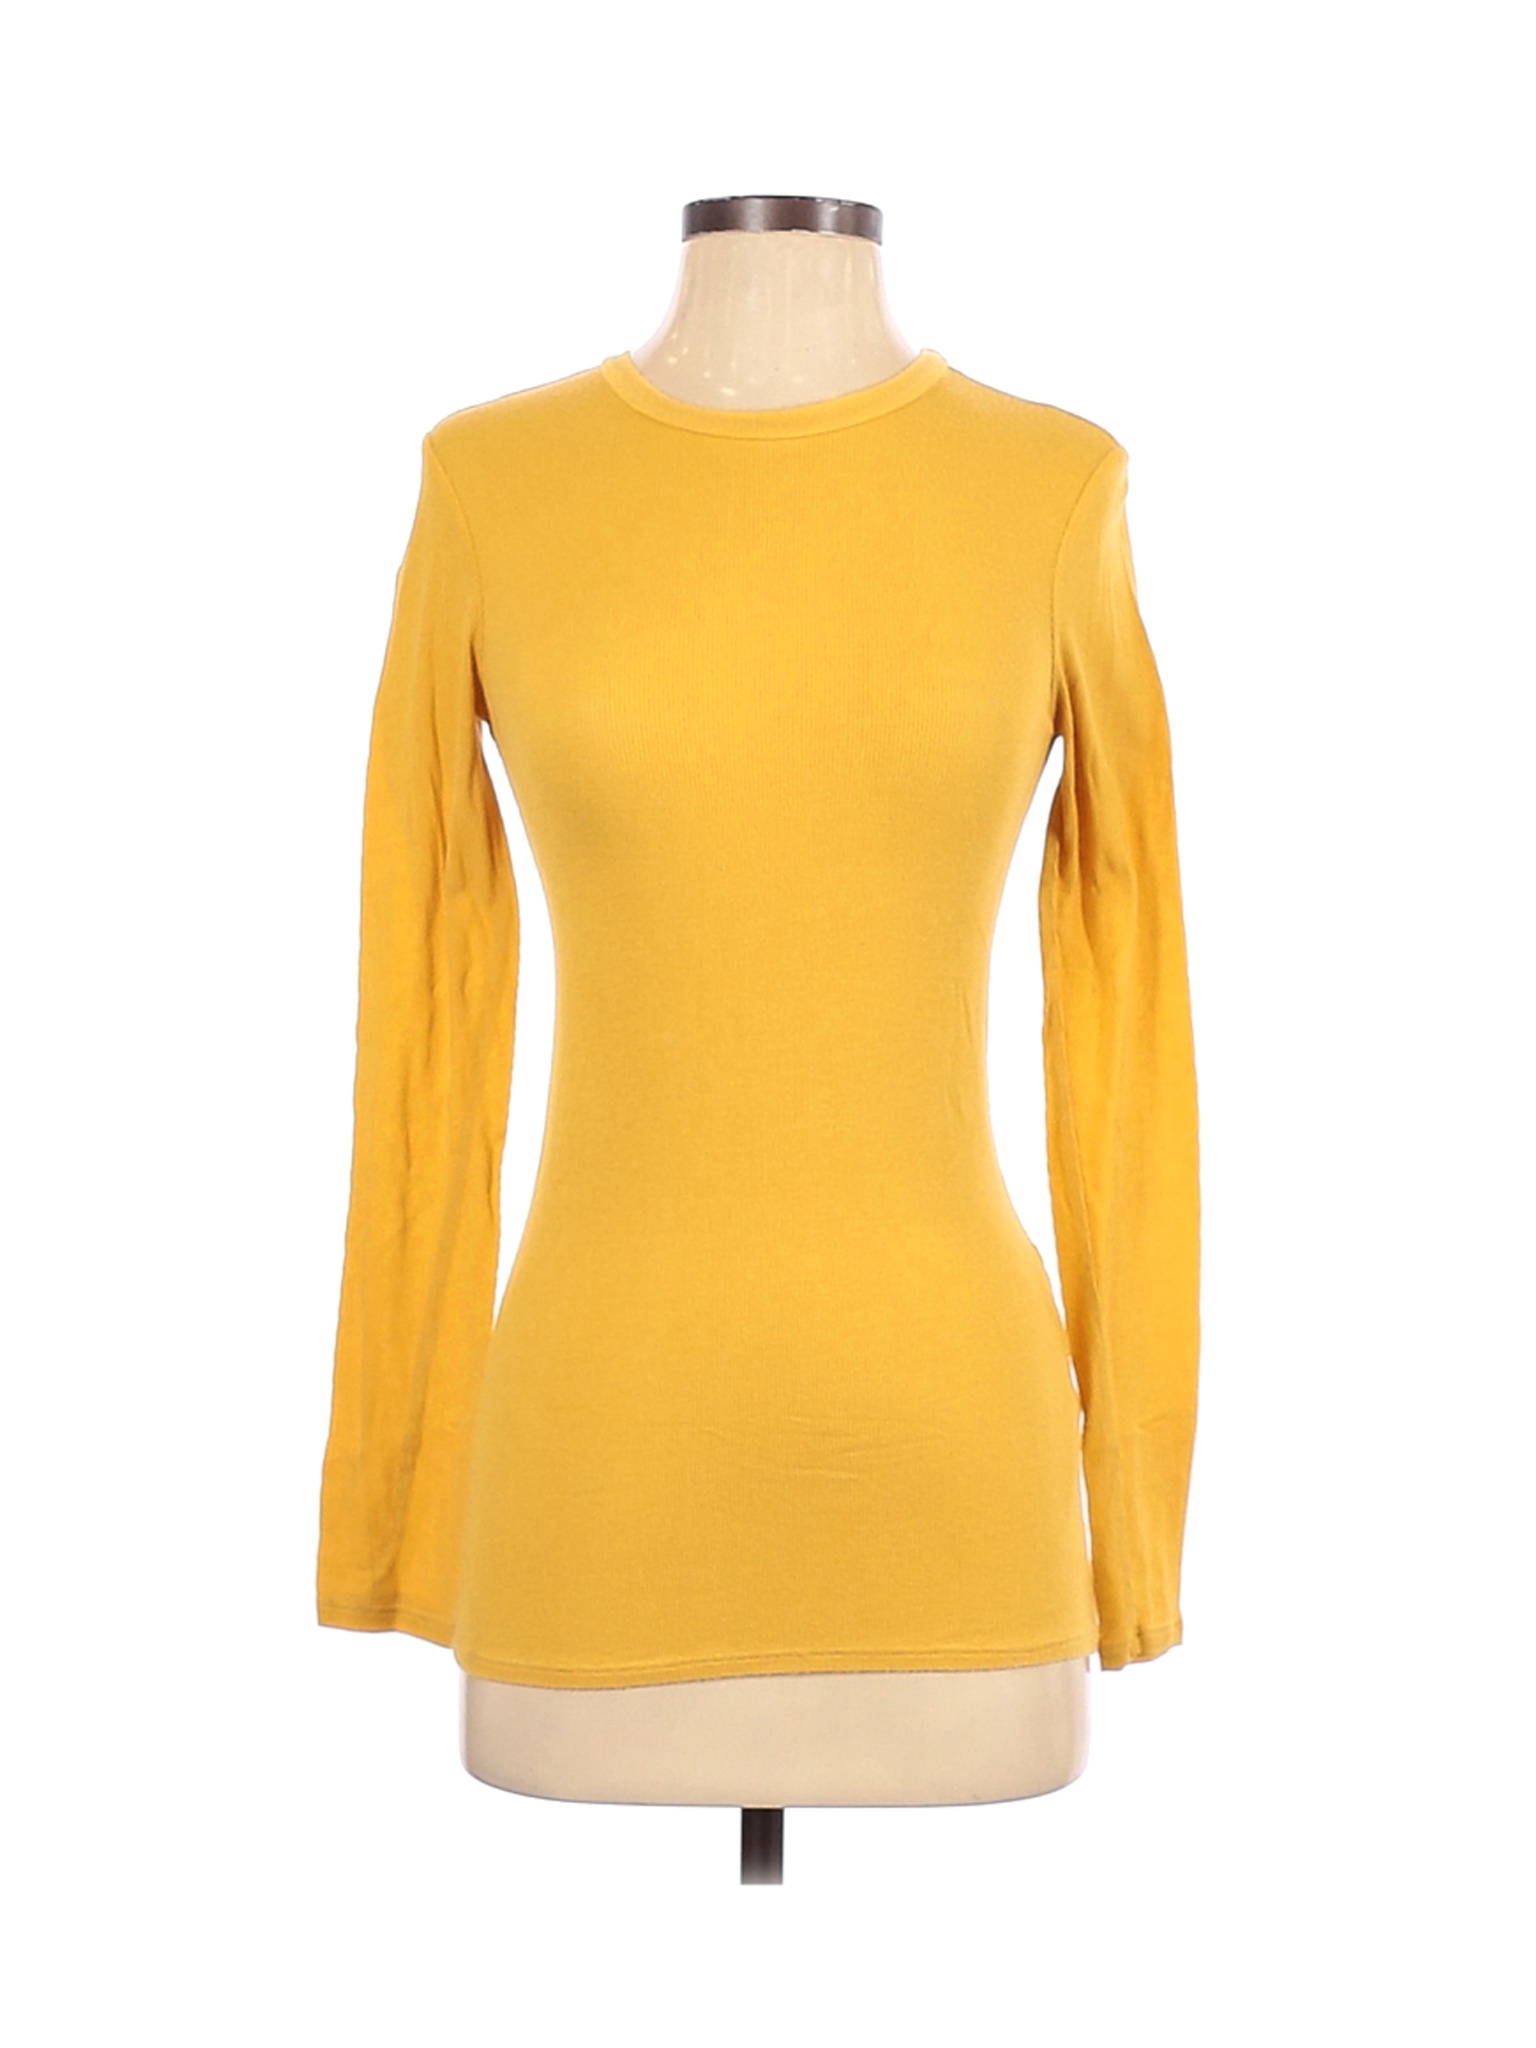 Reformation Women Yellow Long Sleeve T-Shirt S | eBay